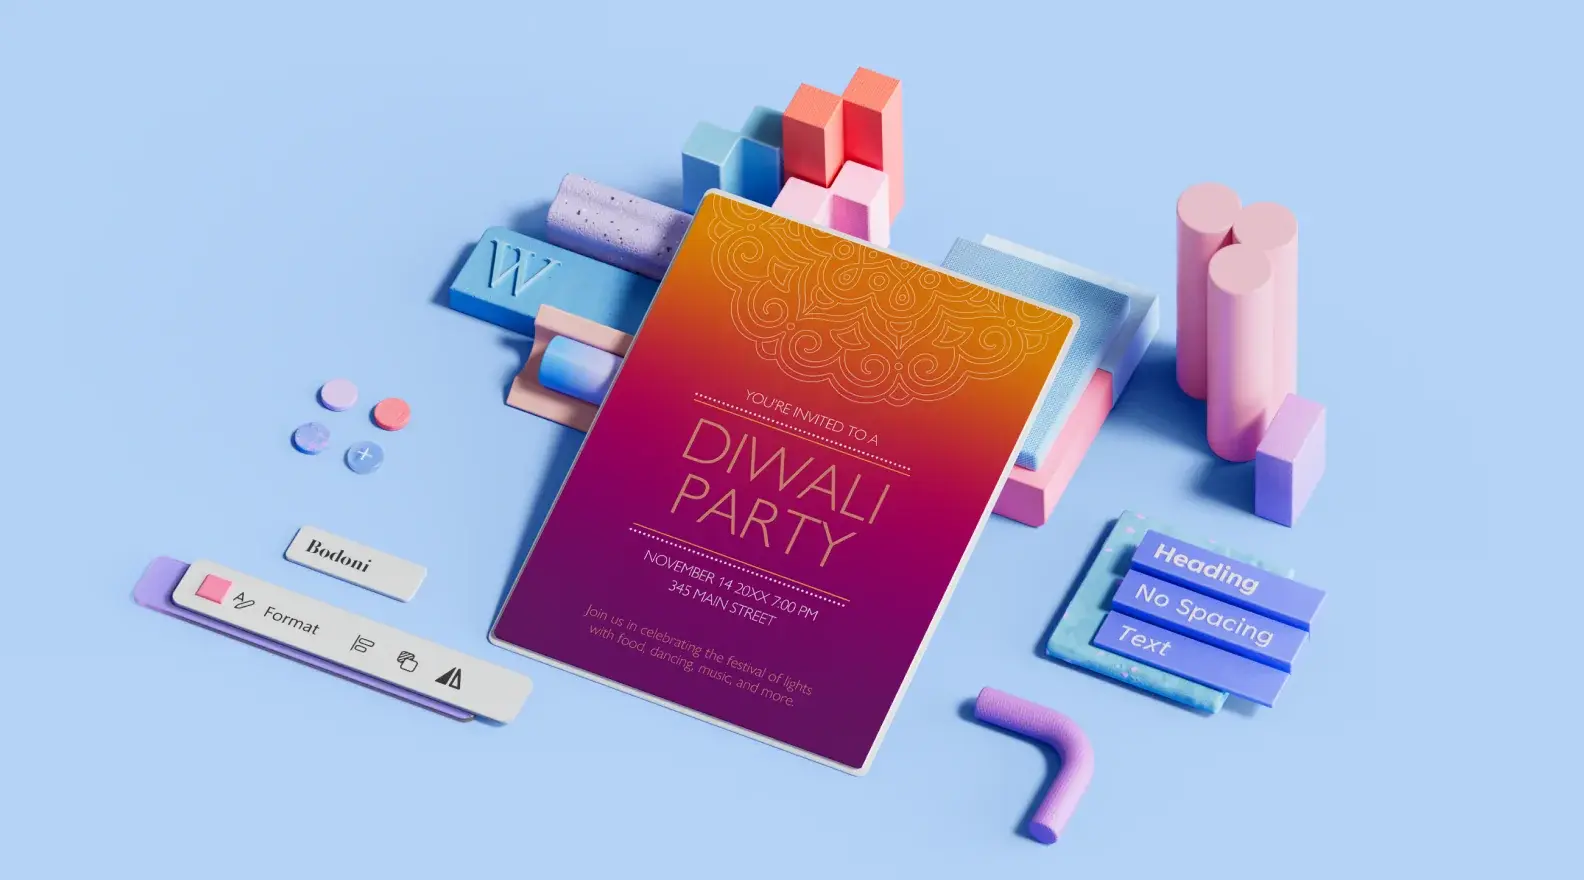 Modelo de panfleto de evento de festa Diwali cercado por elementos de design 3D